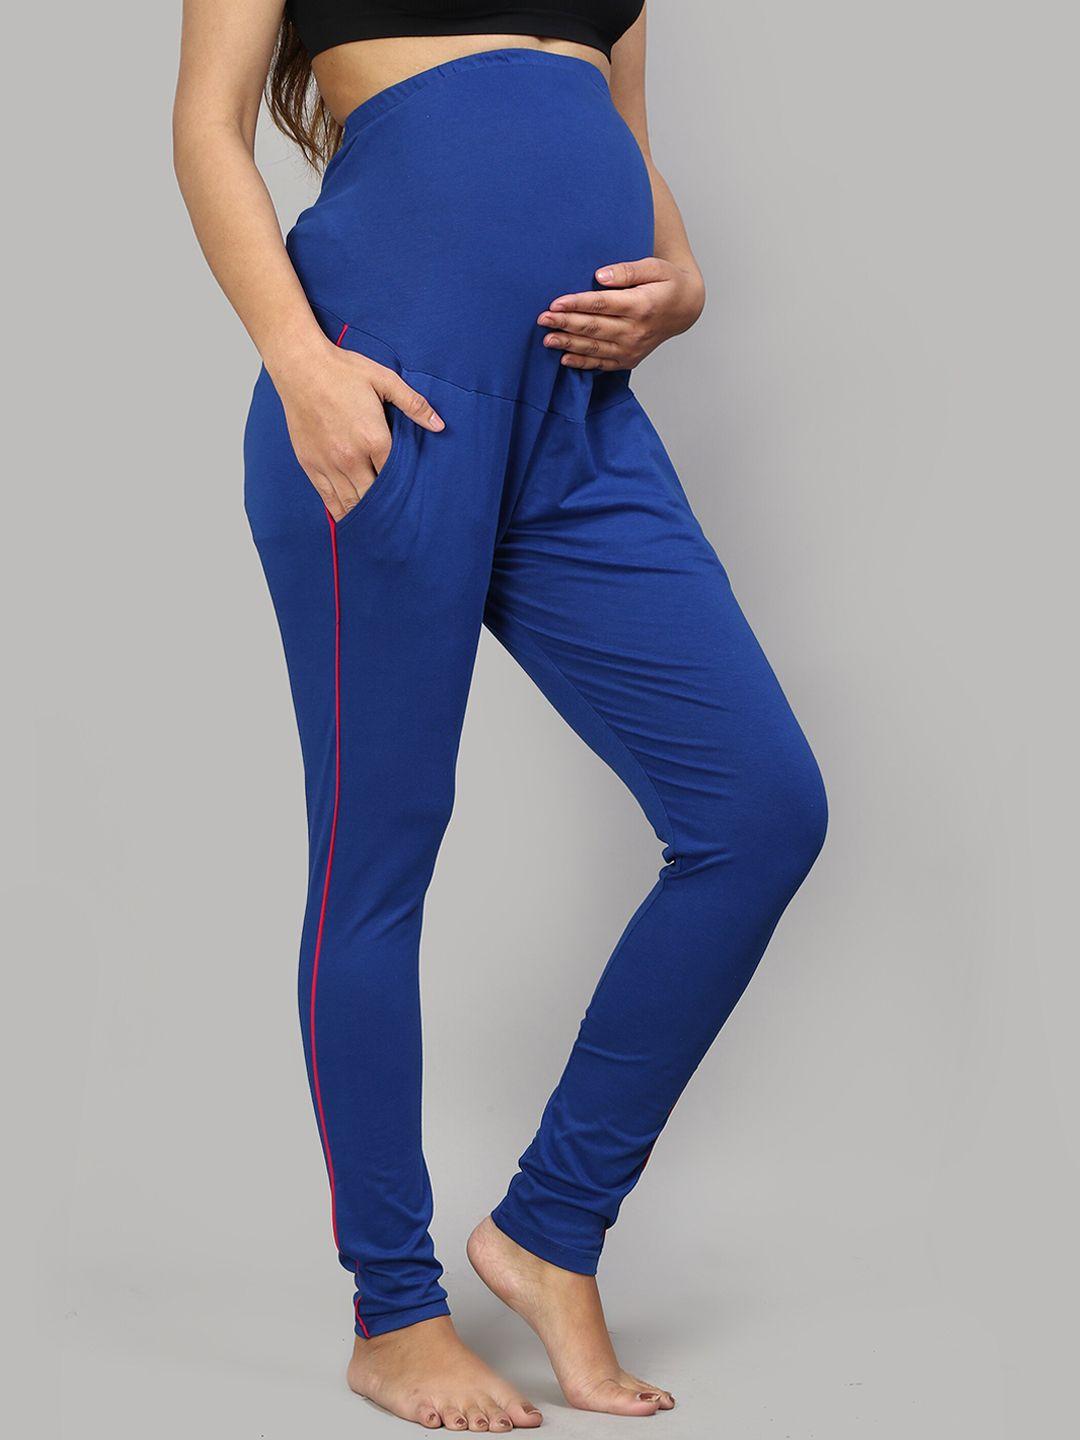 sillyboom women blue solid maternity churidar length yoga pants leggings